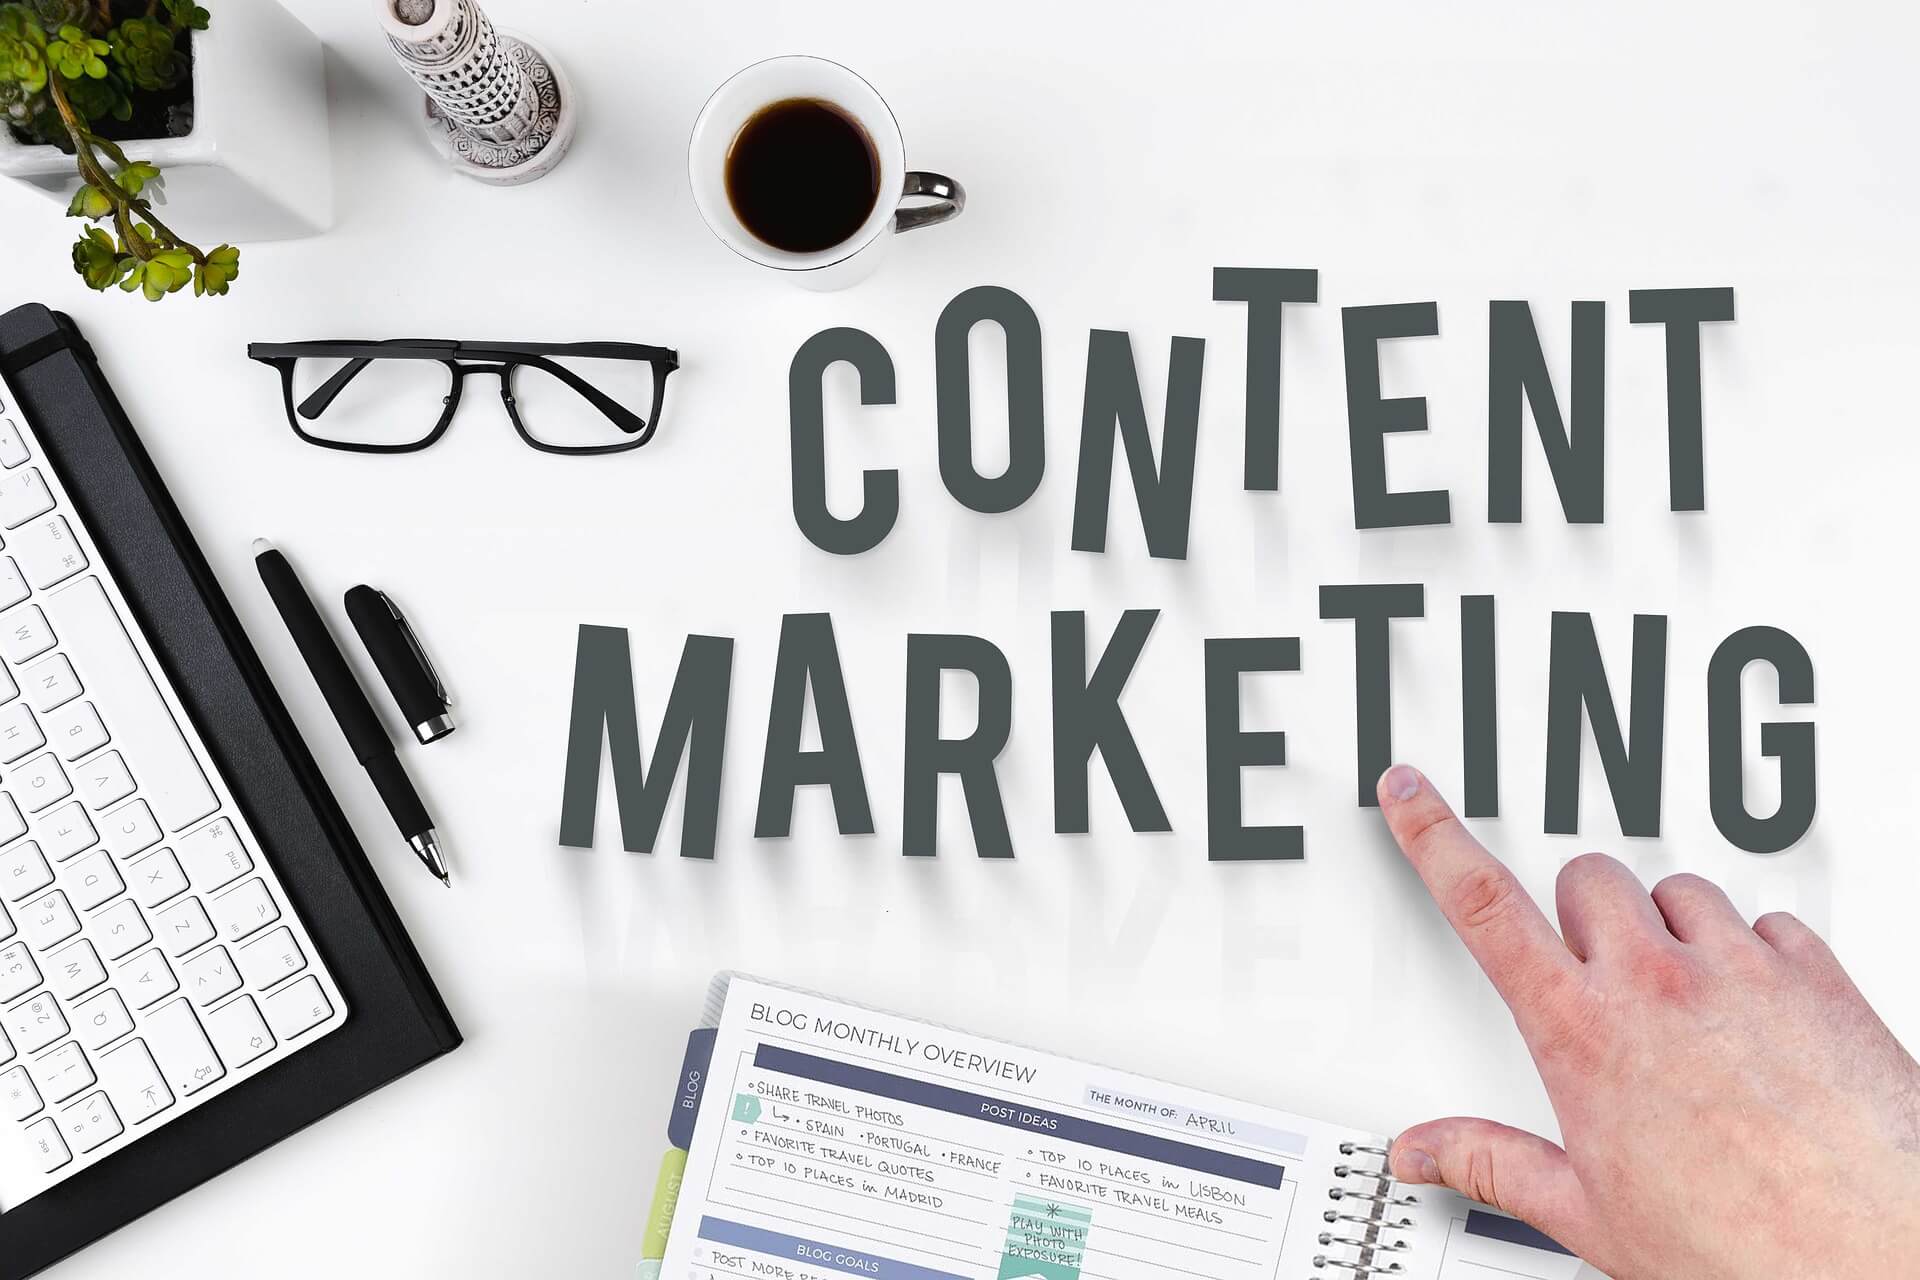 Does Content Marketing Work? Bridge the Gap Media